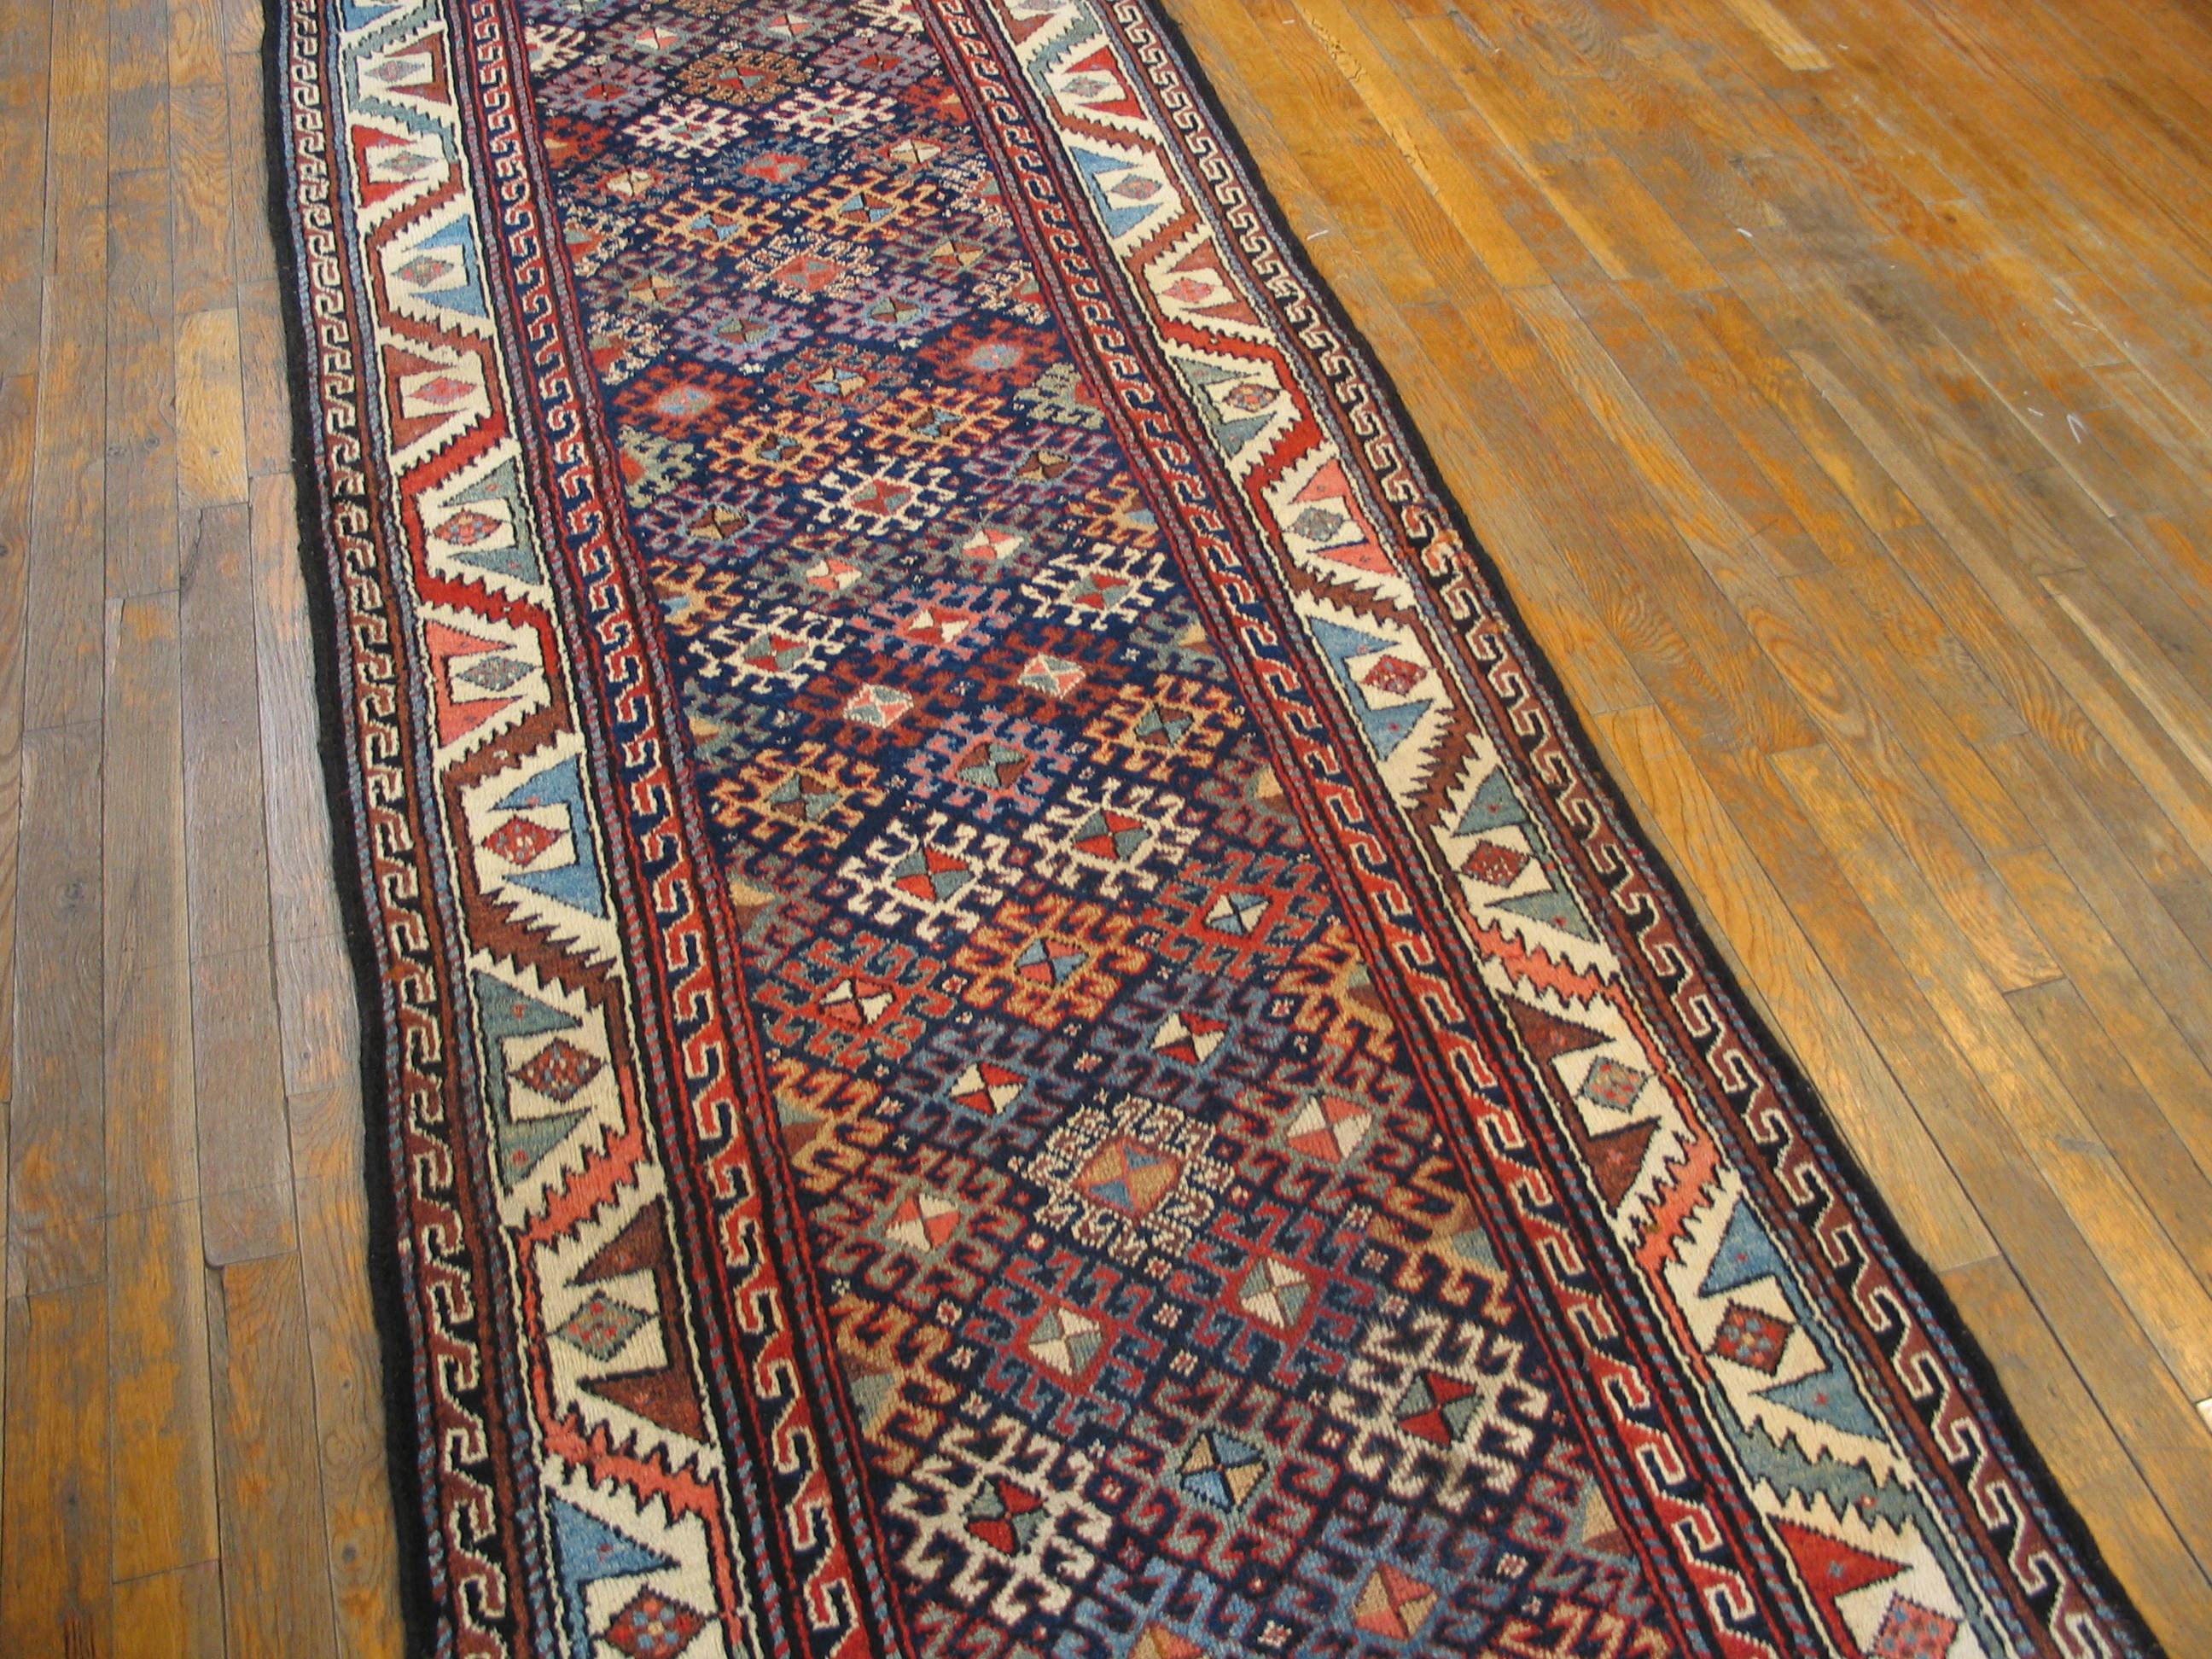 Antique Persian Kurdish rug, size: 3'3